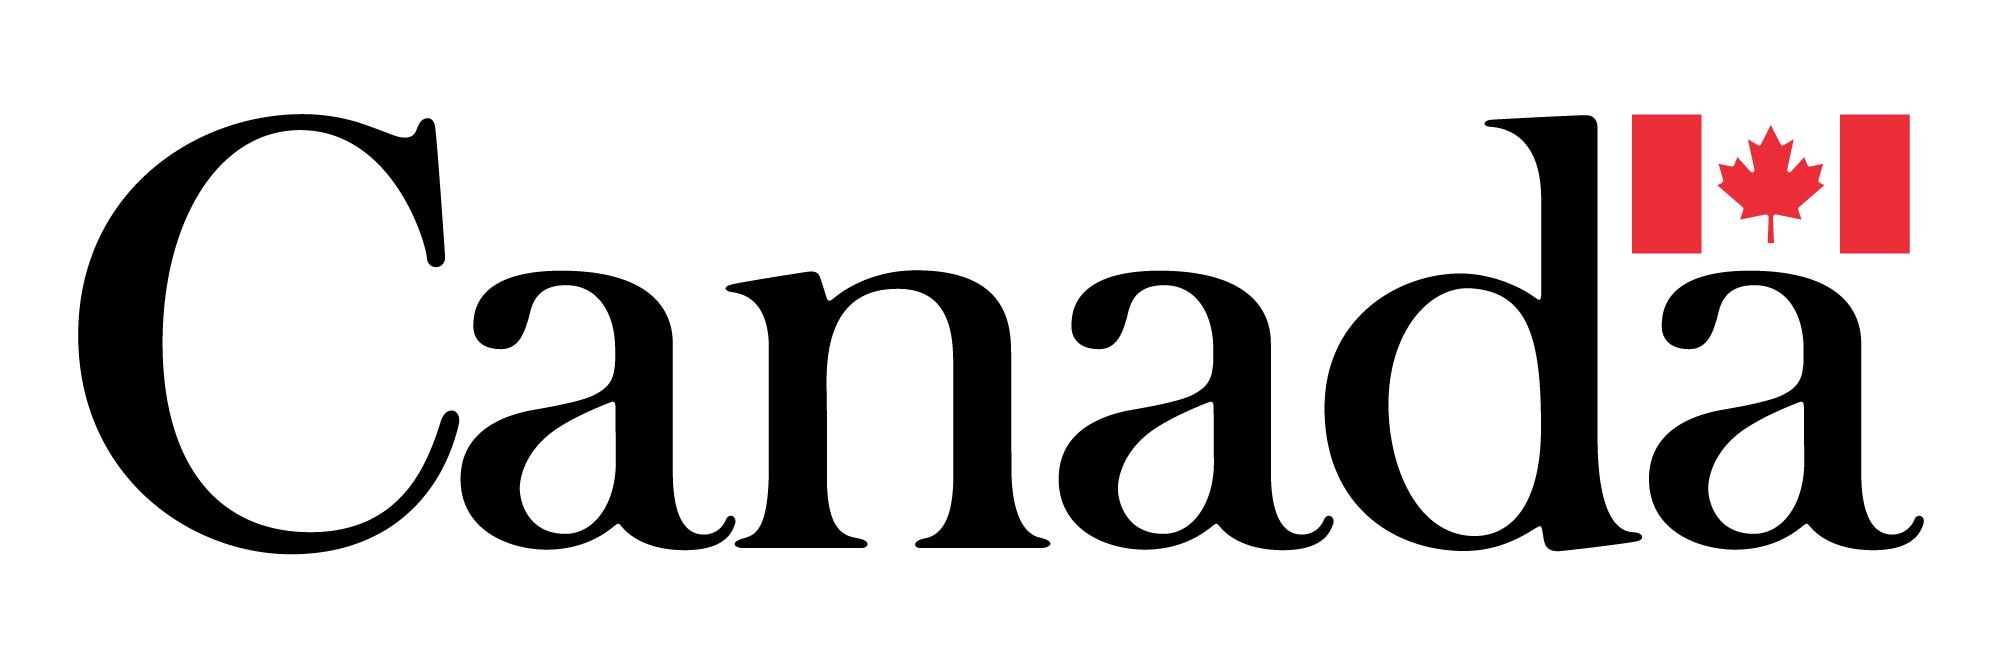 canada wordmark